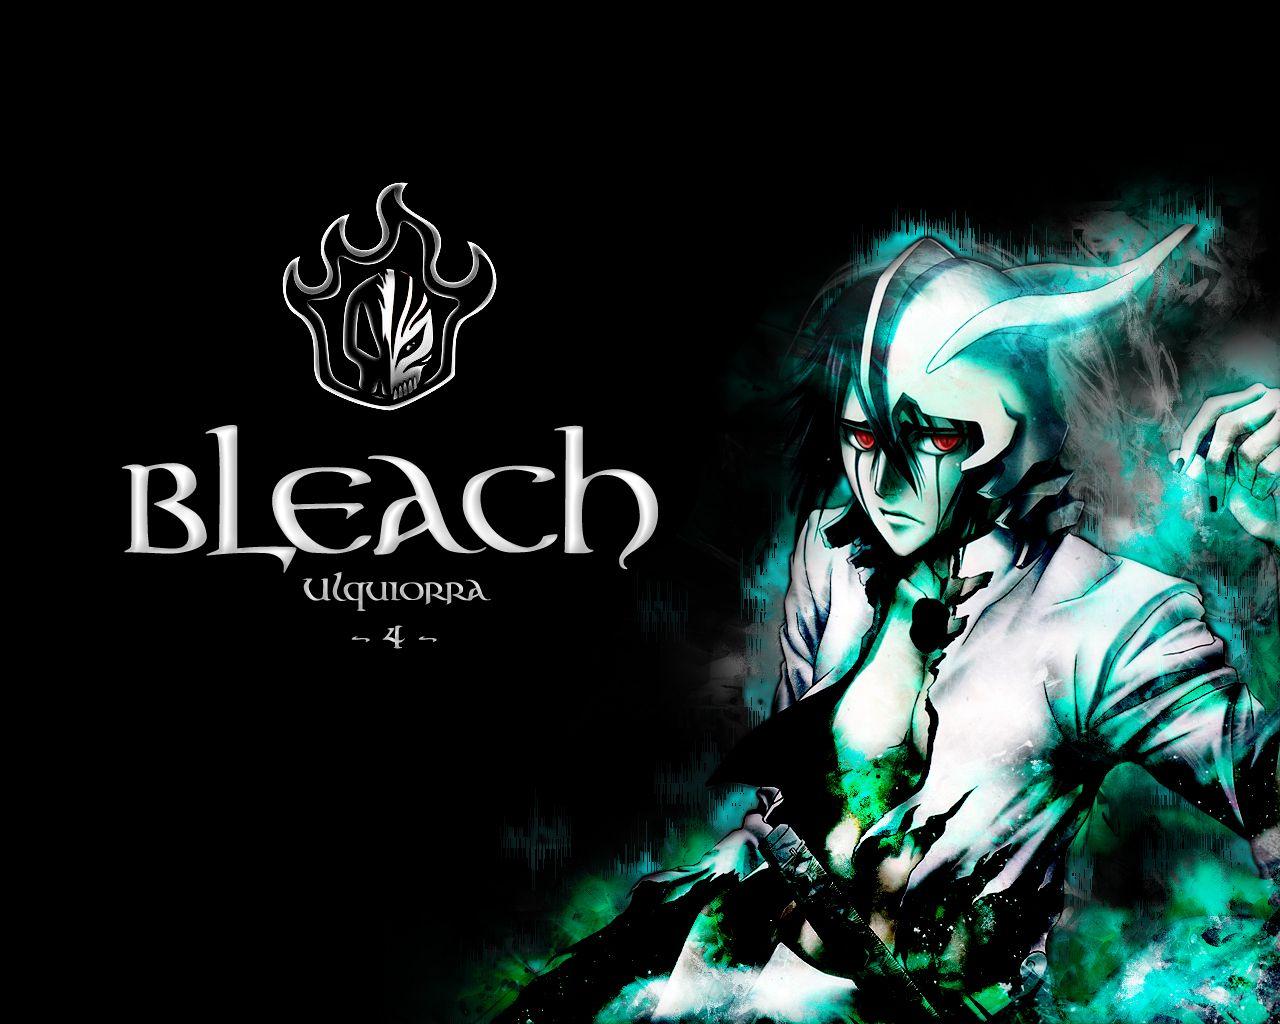 Ulquiorra Schiffer - Bleach & Anime Background Wallpapers on Desktop Nexus  (Image 1166122)